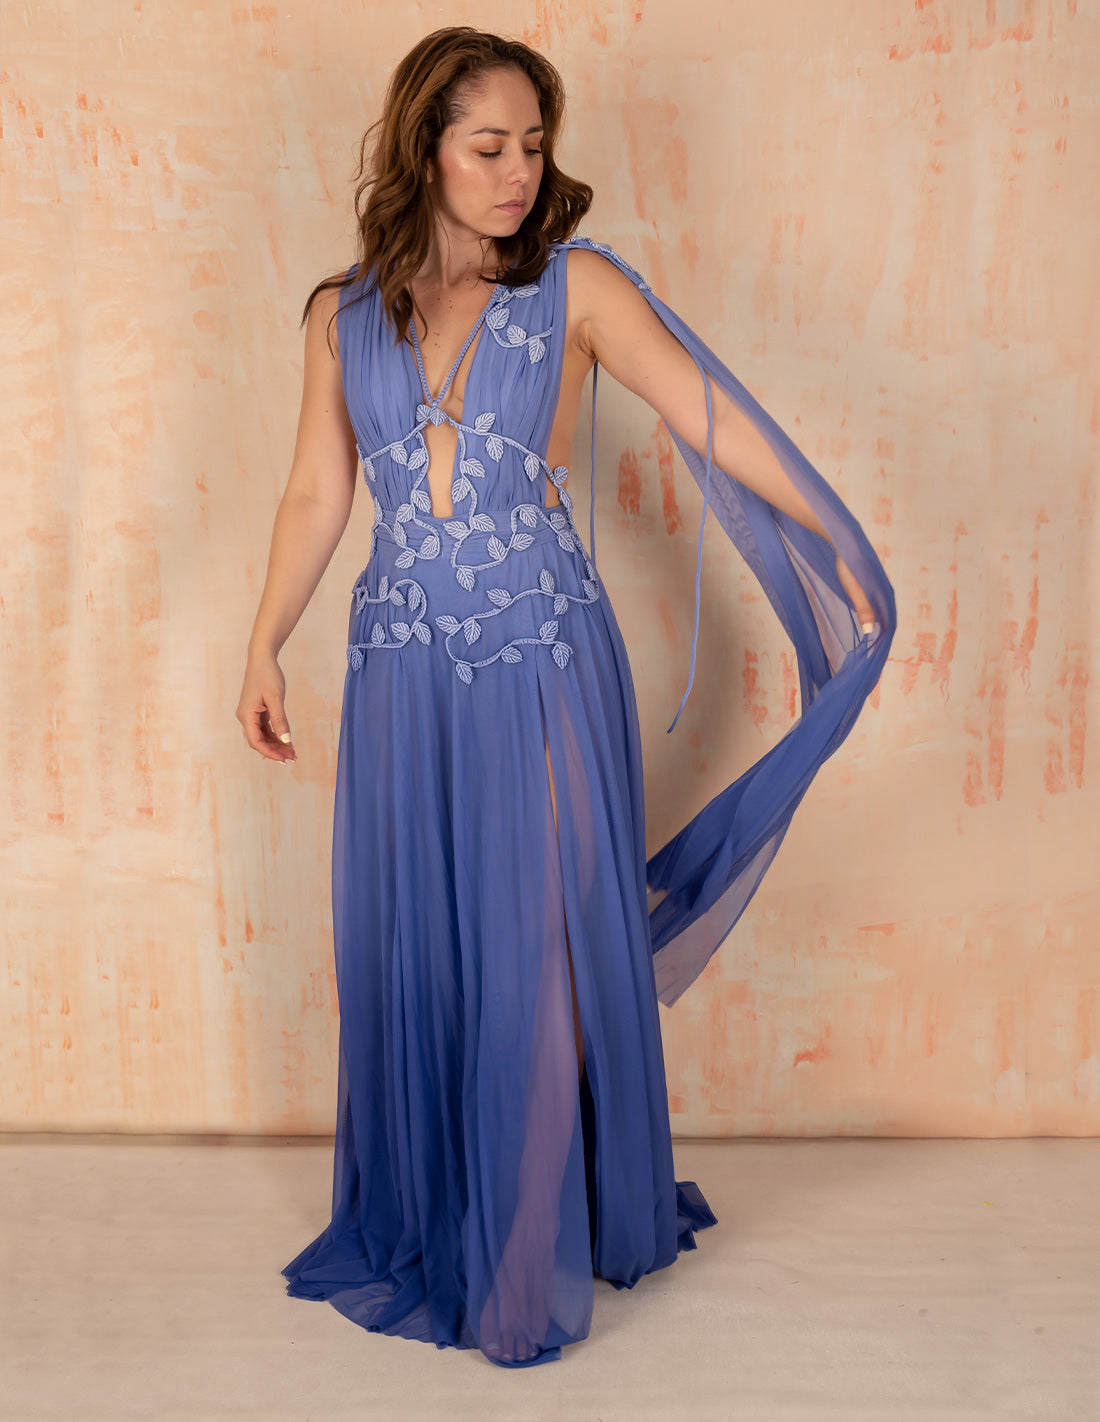 Copernico Dress Sky Blue. Hand-Dyed Dress With Hand Woven Macramé In Sky Blue. Entreaguas